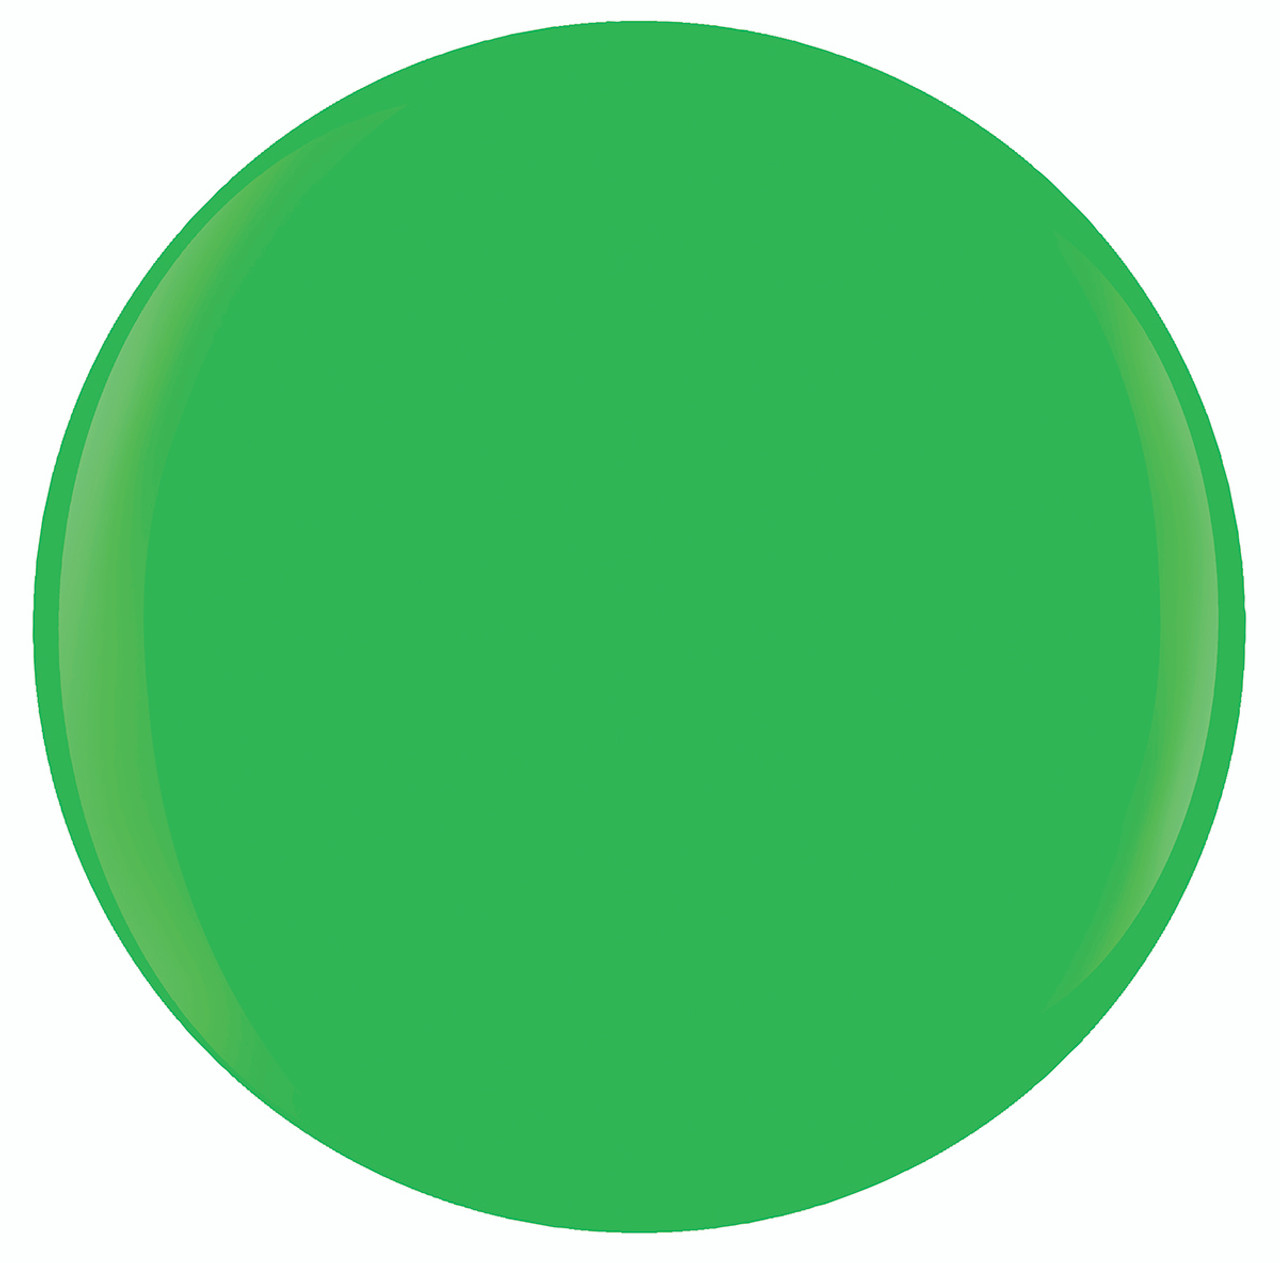 Gelish Art Form Neon Green - 5g